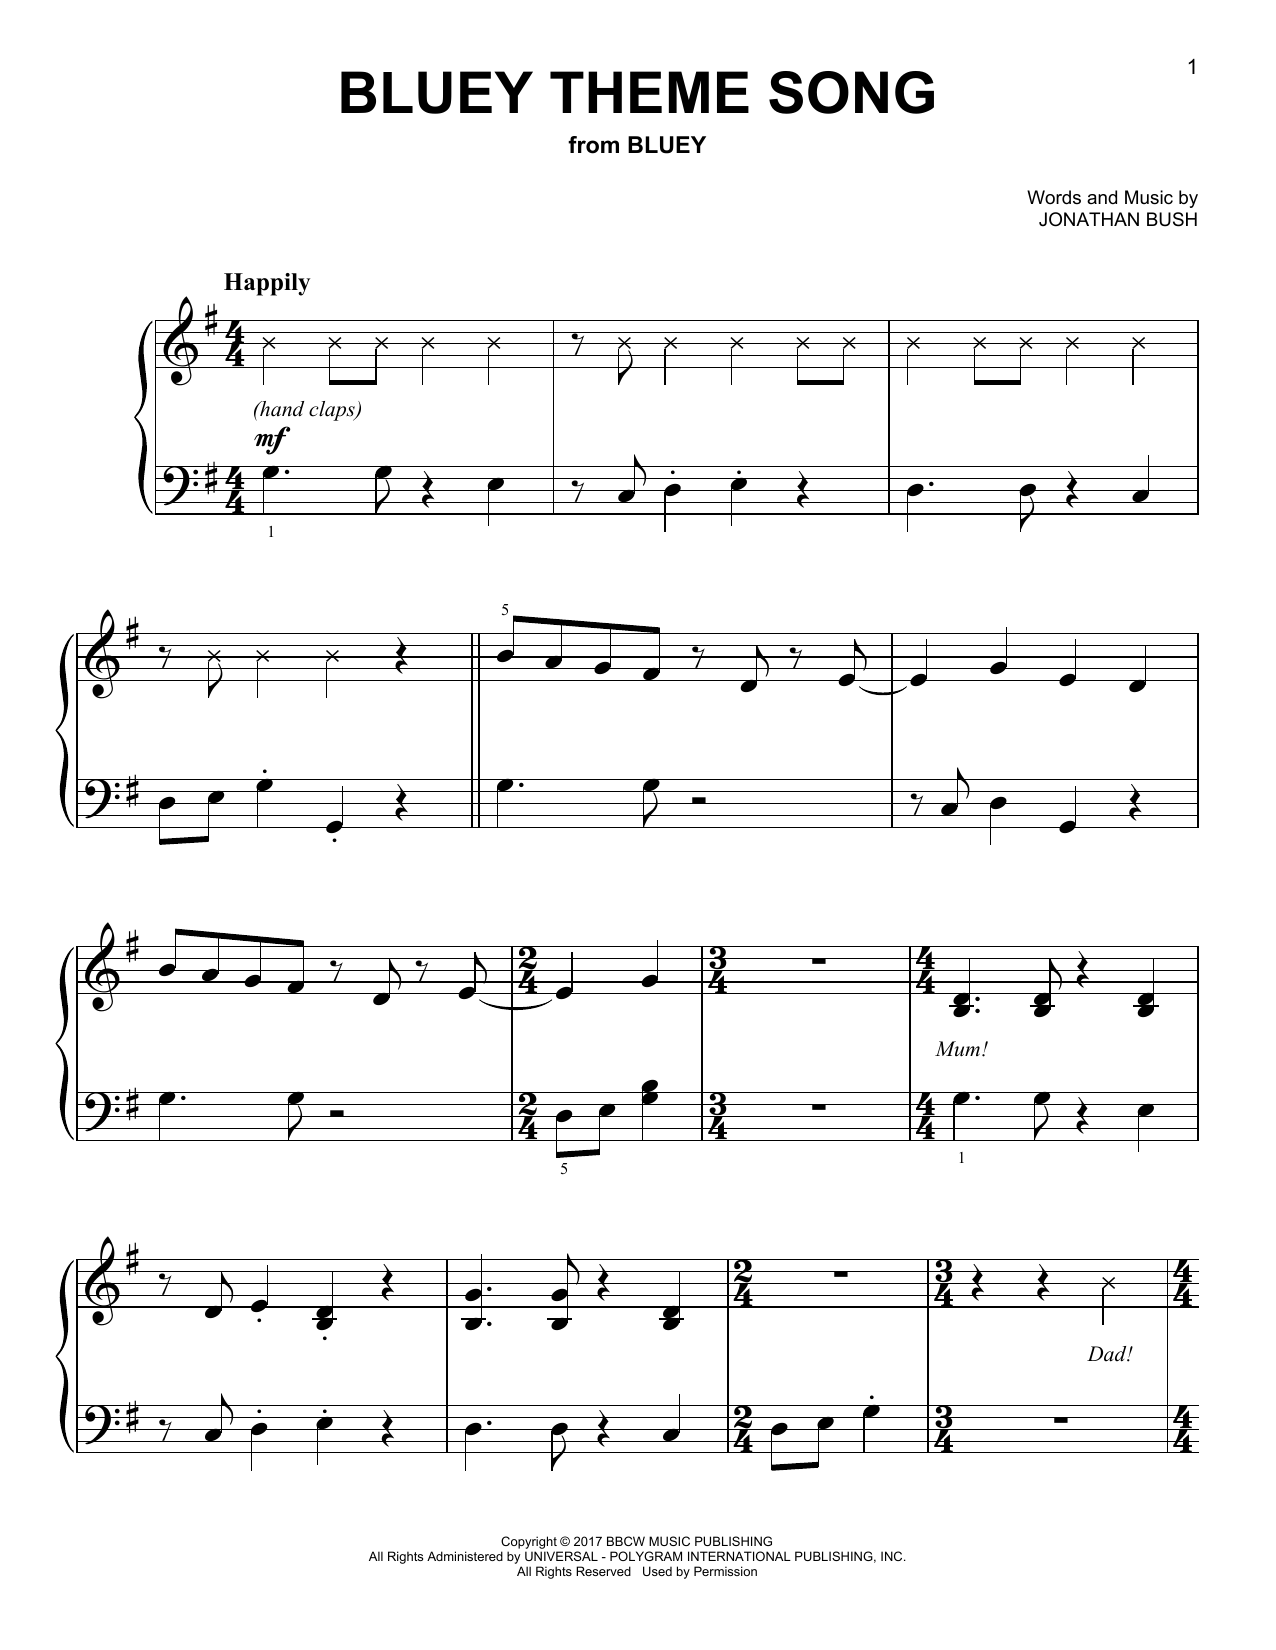 Jonathan Bush "Bluey Theme Song" Sheet Music Notes | Download Printable